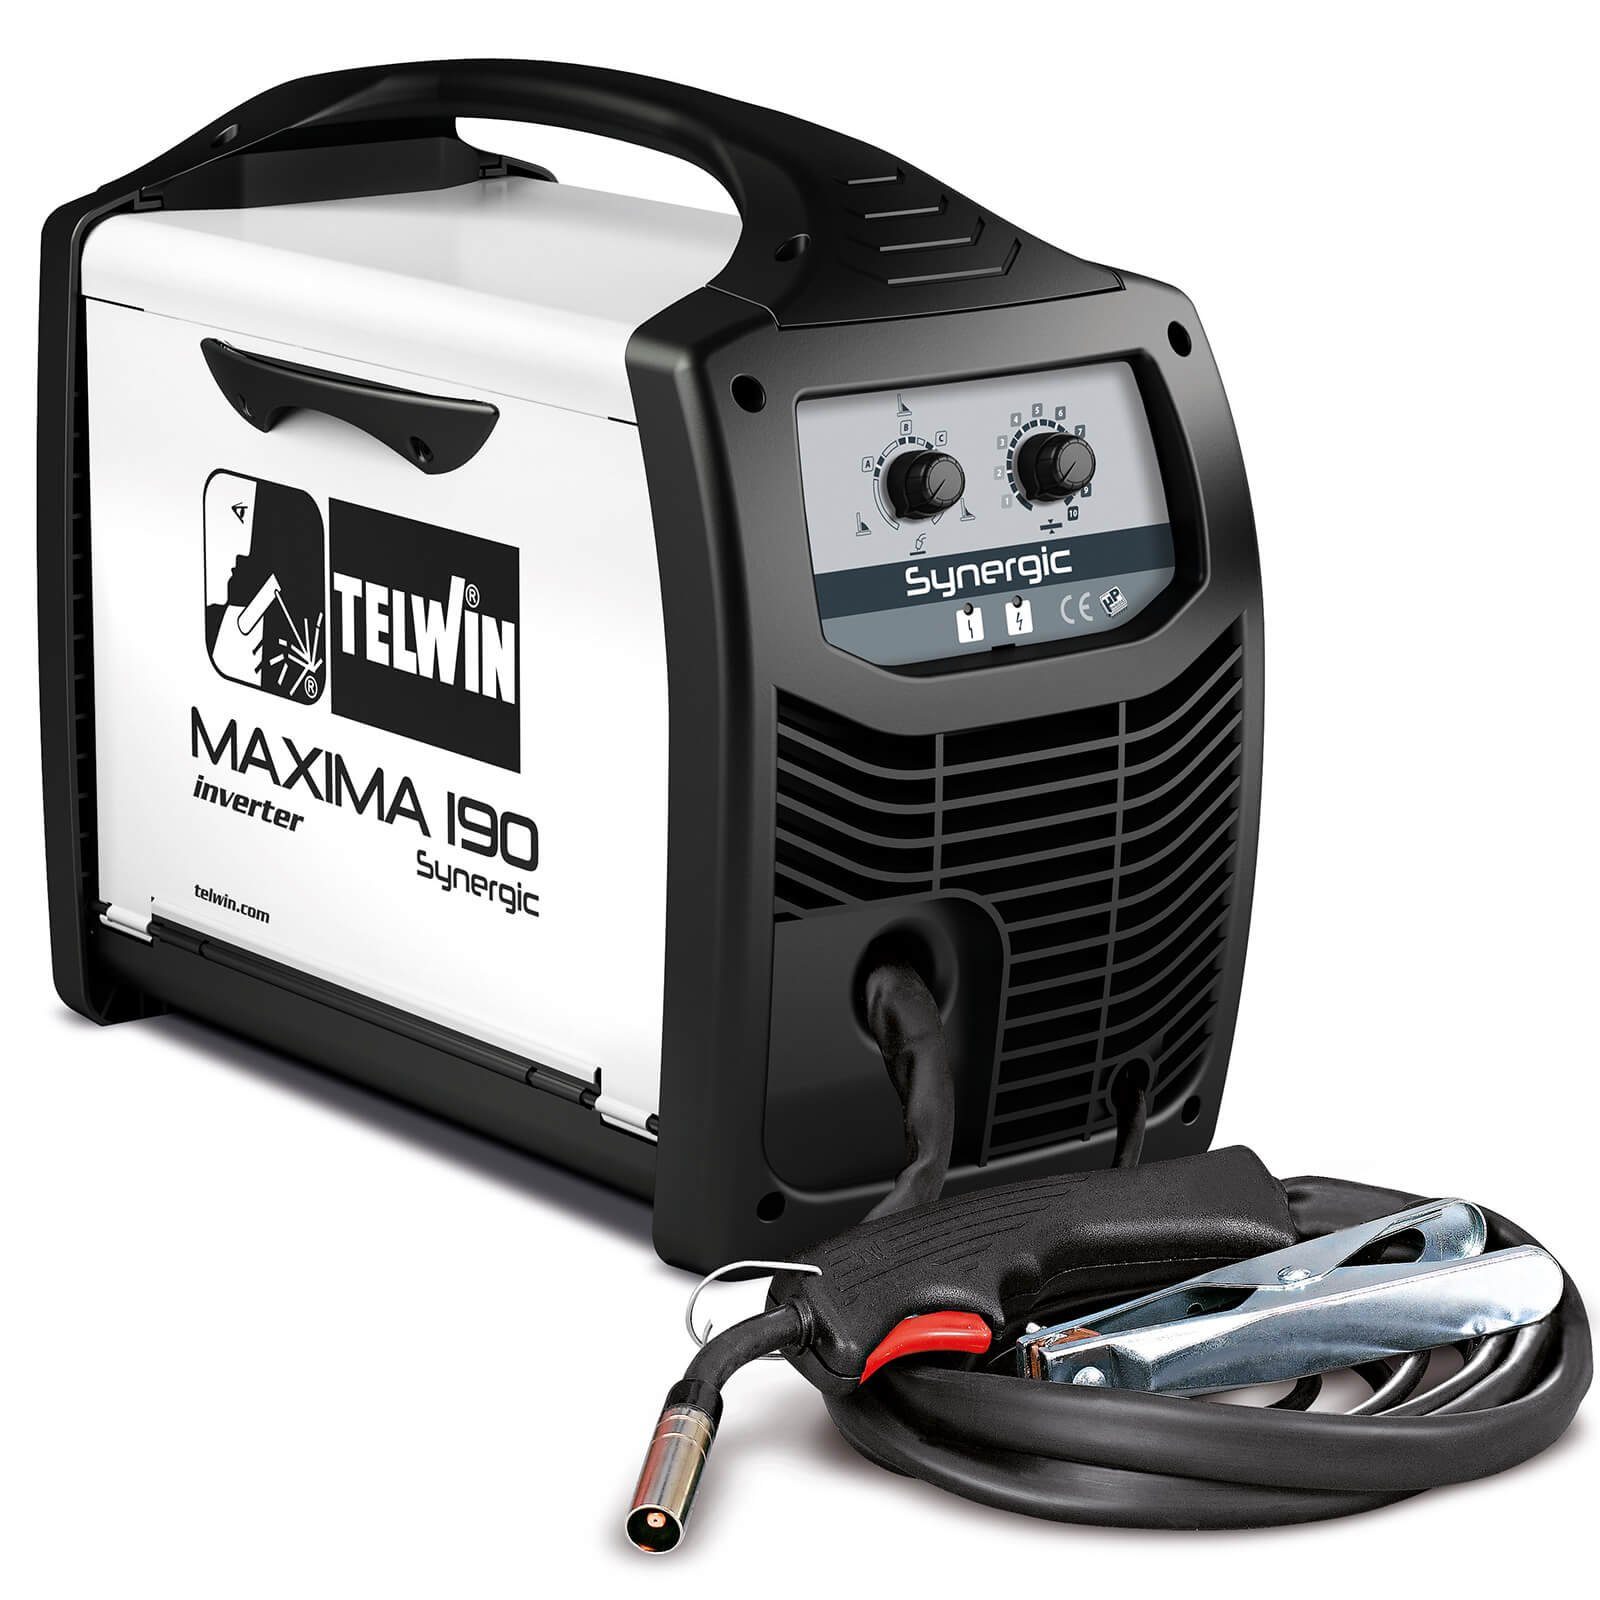 TELWIN Elektroschweißgerät Telwin Elements MAXIMA 190 SYNERGIC Schutzgas  Schweißgerät 170A | Schweißgeräte